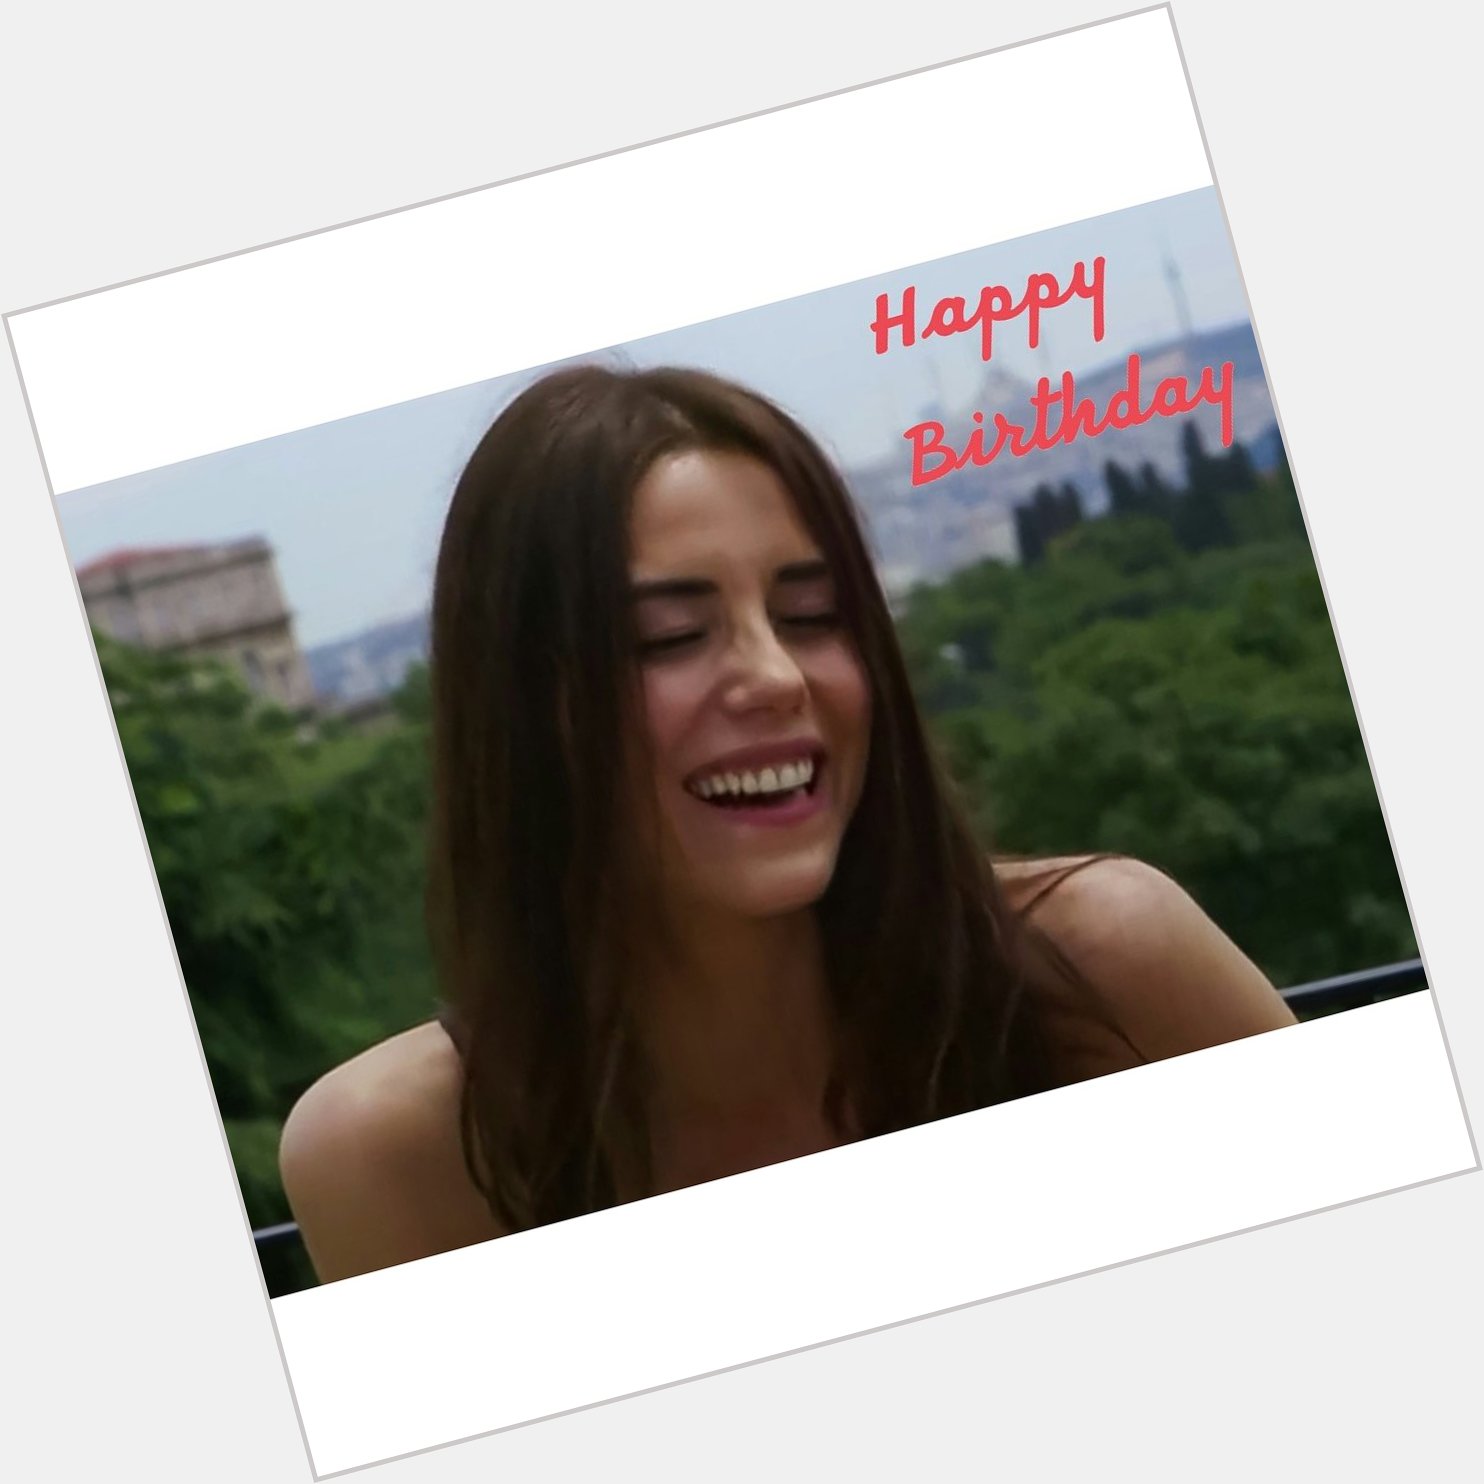 Happy Birthday for you turkish princess Cansu Dere       